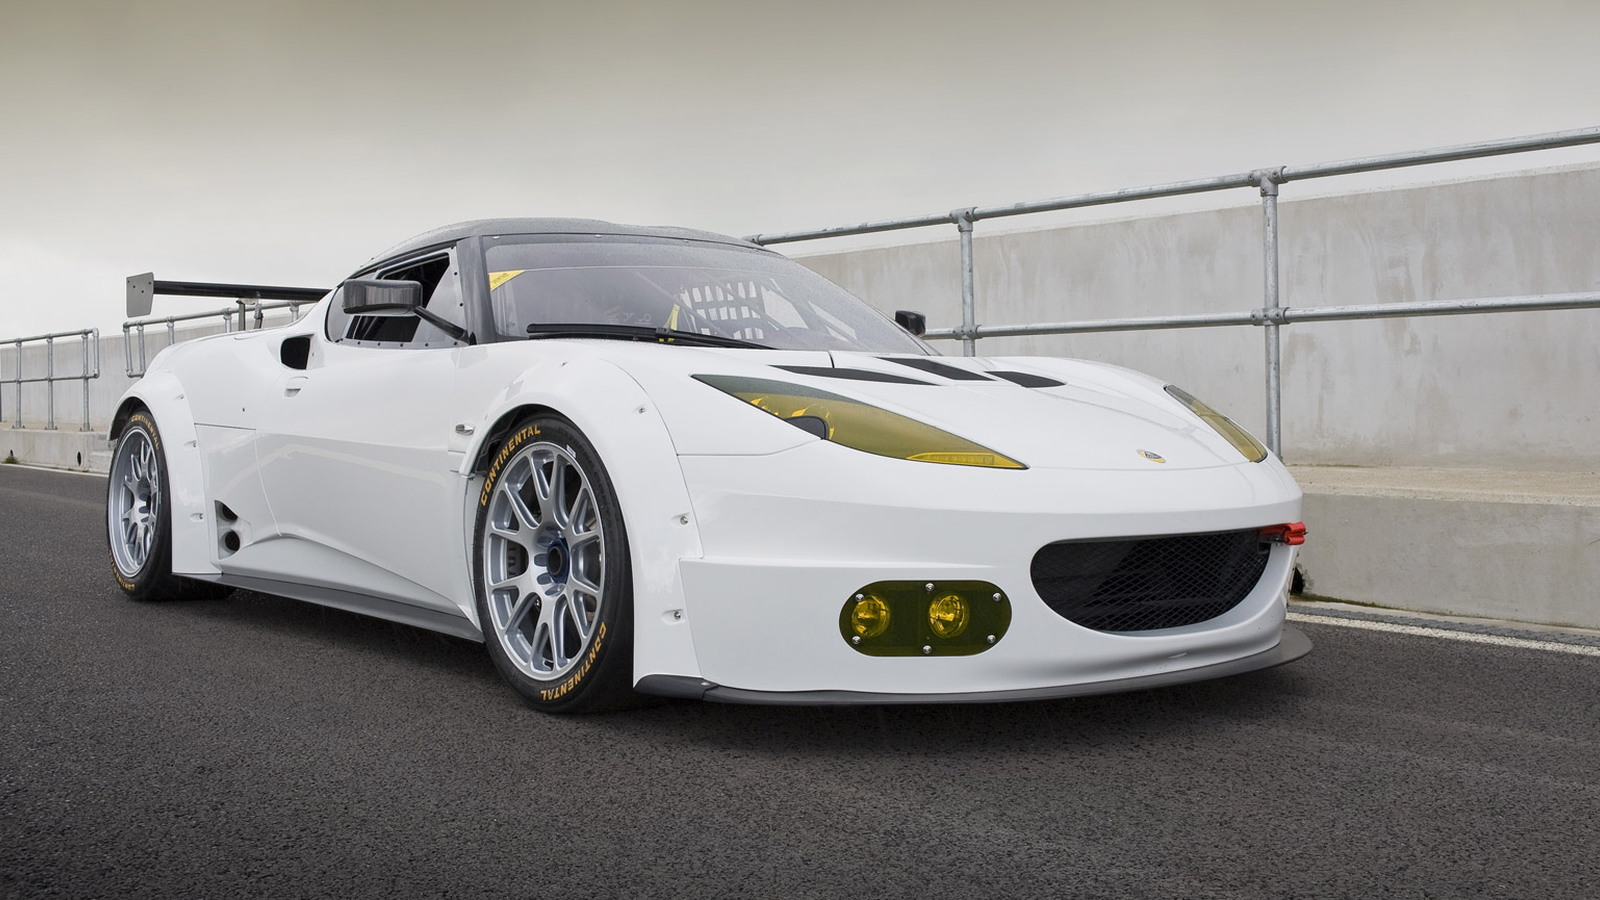 2012 Lotus Evora GX Grand-Am race car